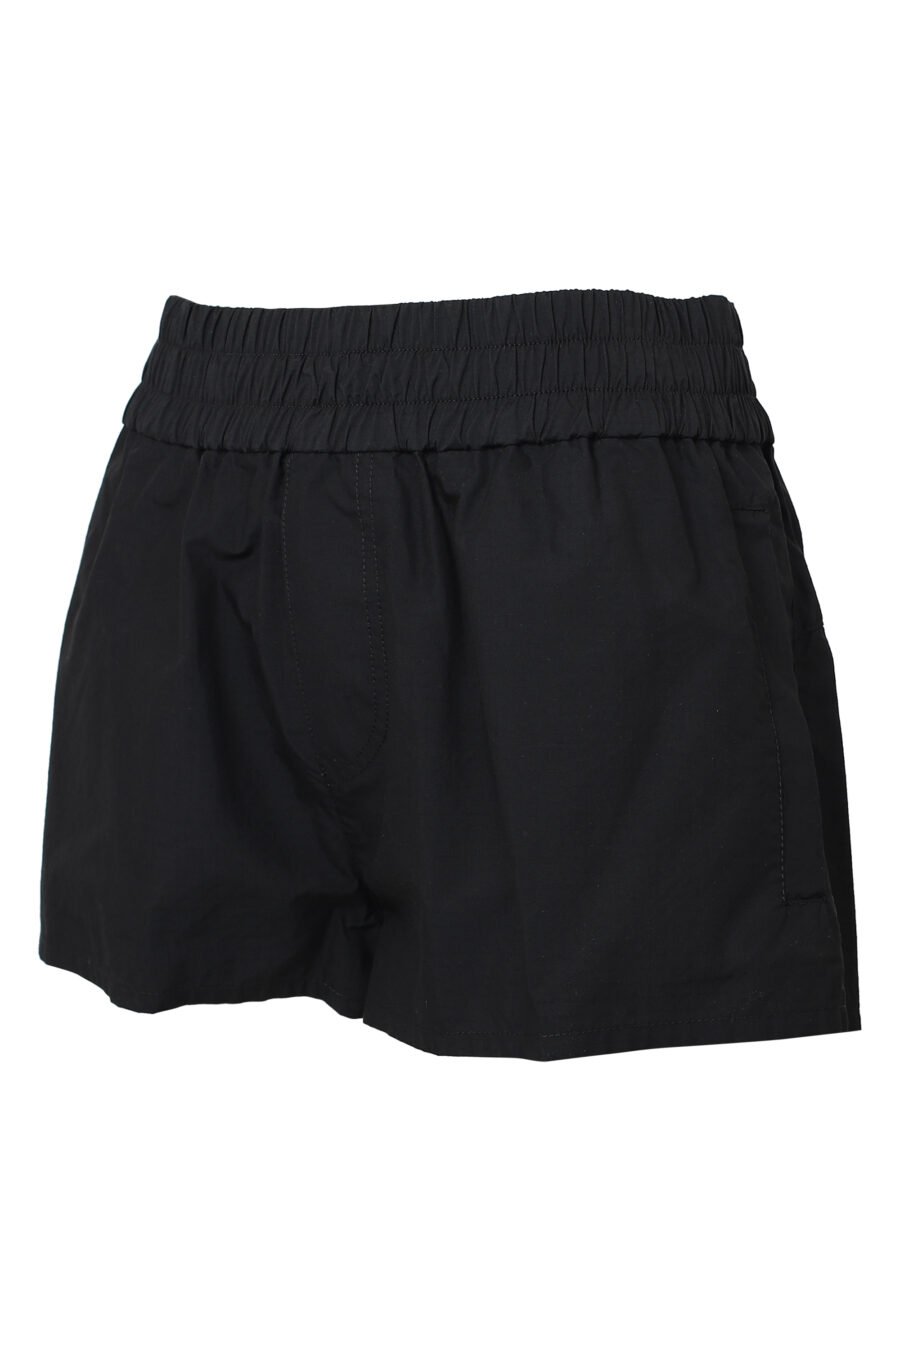 Pantalón negro corto con minilogo multicolor - IMG 9852